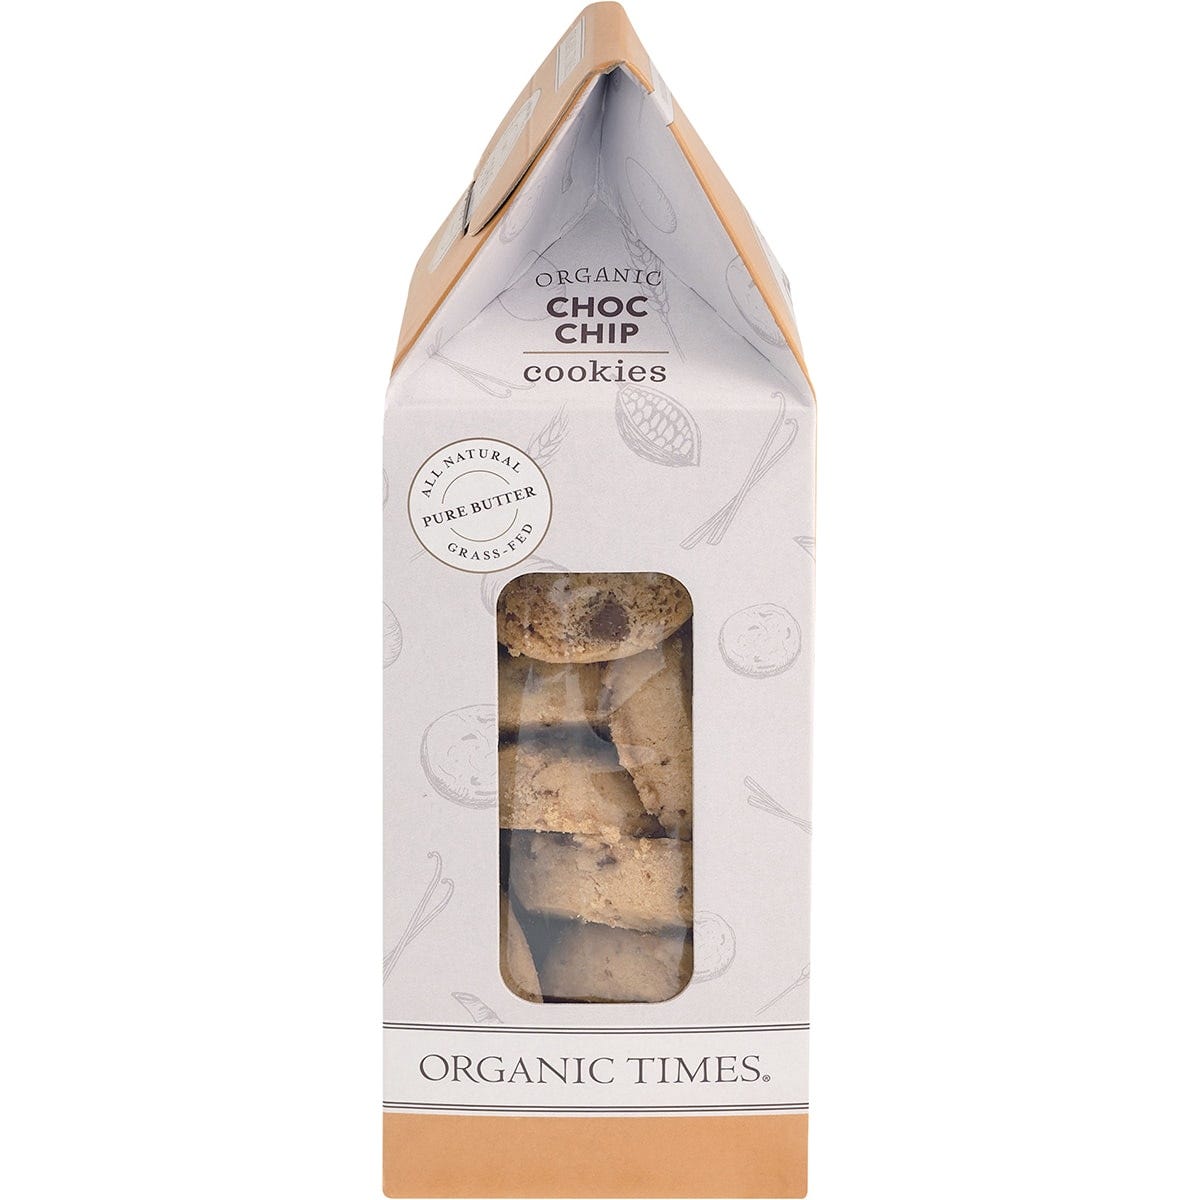 Organic Times Cookies Choc Chip